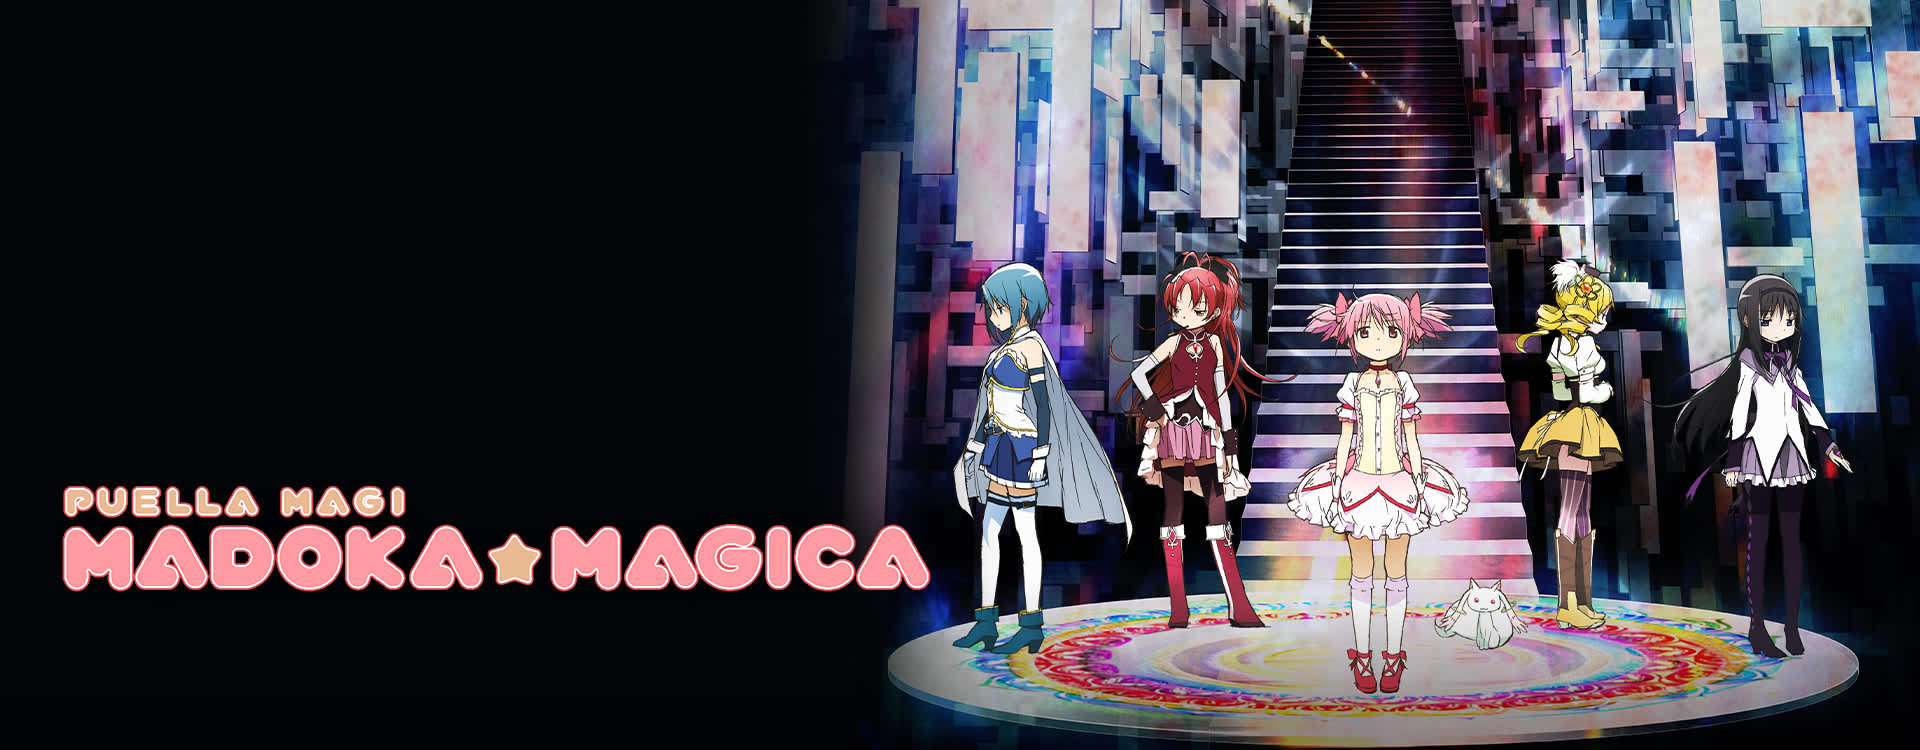 puella magi madoka magica movie 3 download free